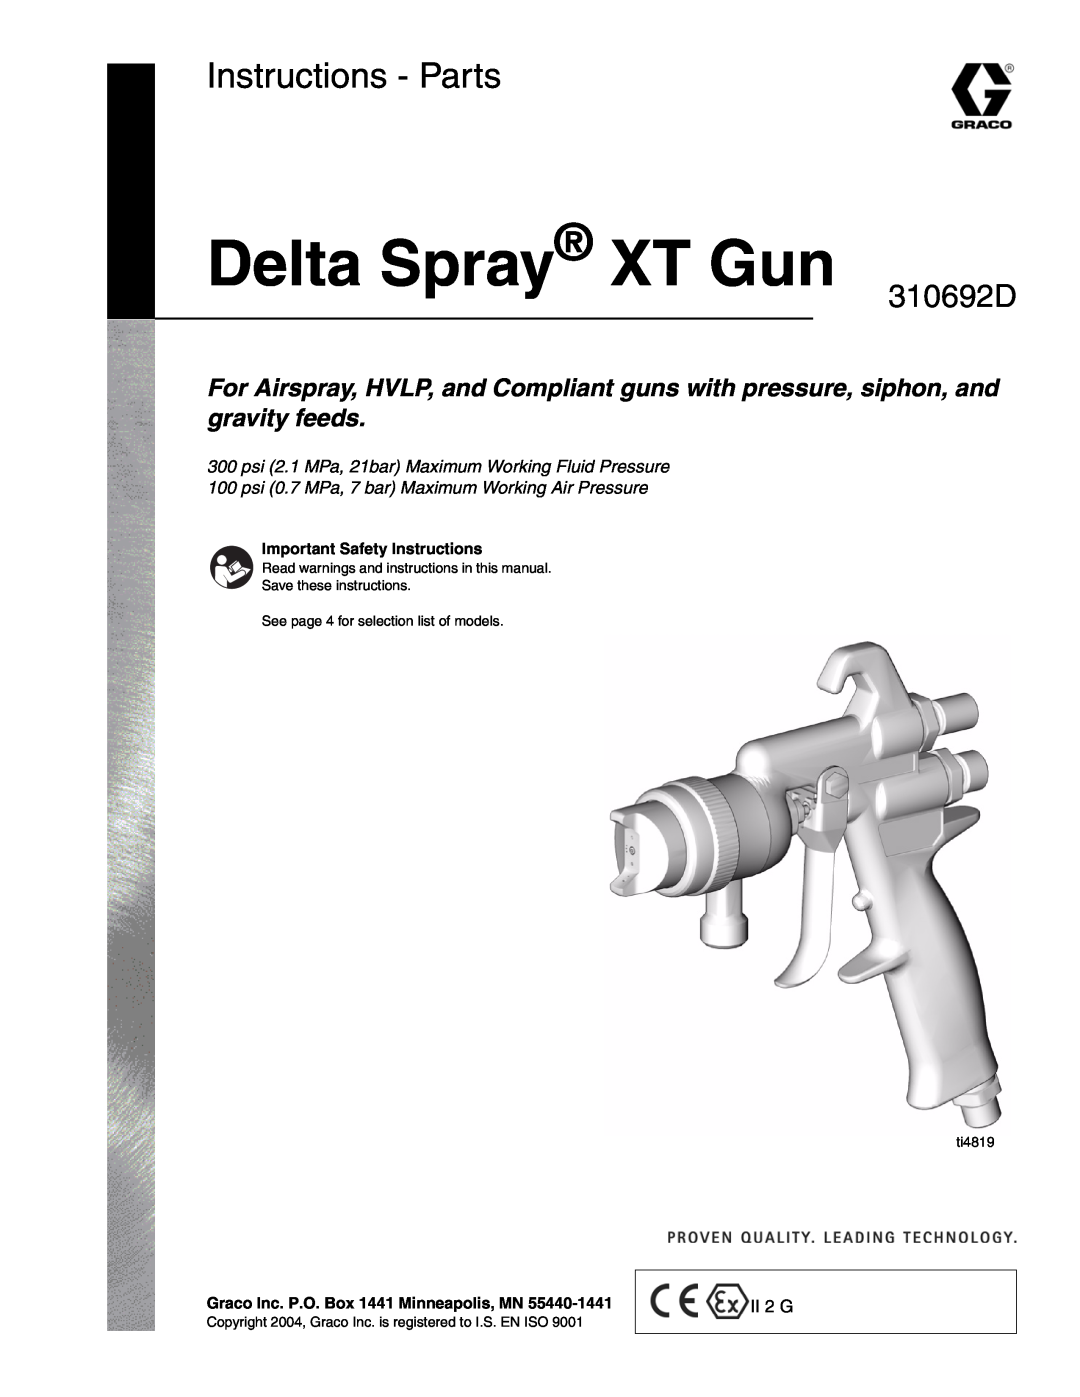 Graco 310692D important safety instructions Delta Spray XT Gun, Instructions - Parts 